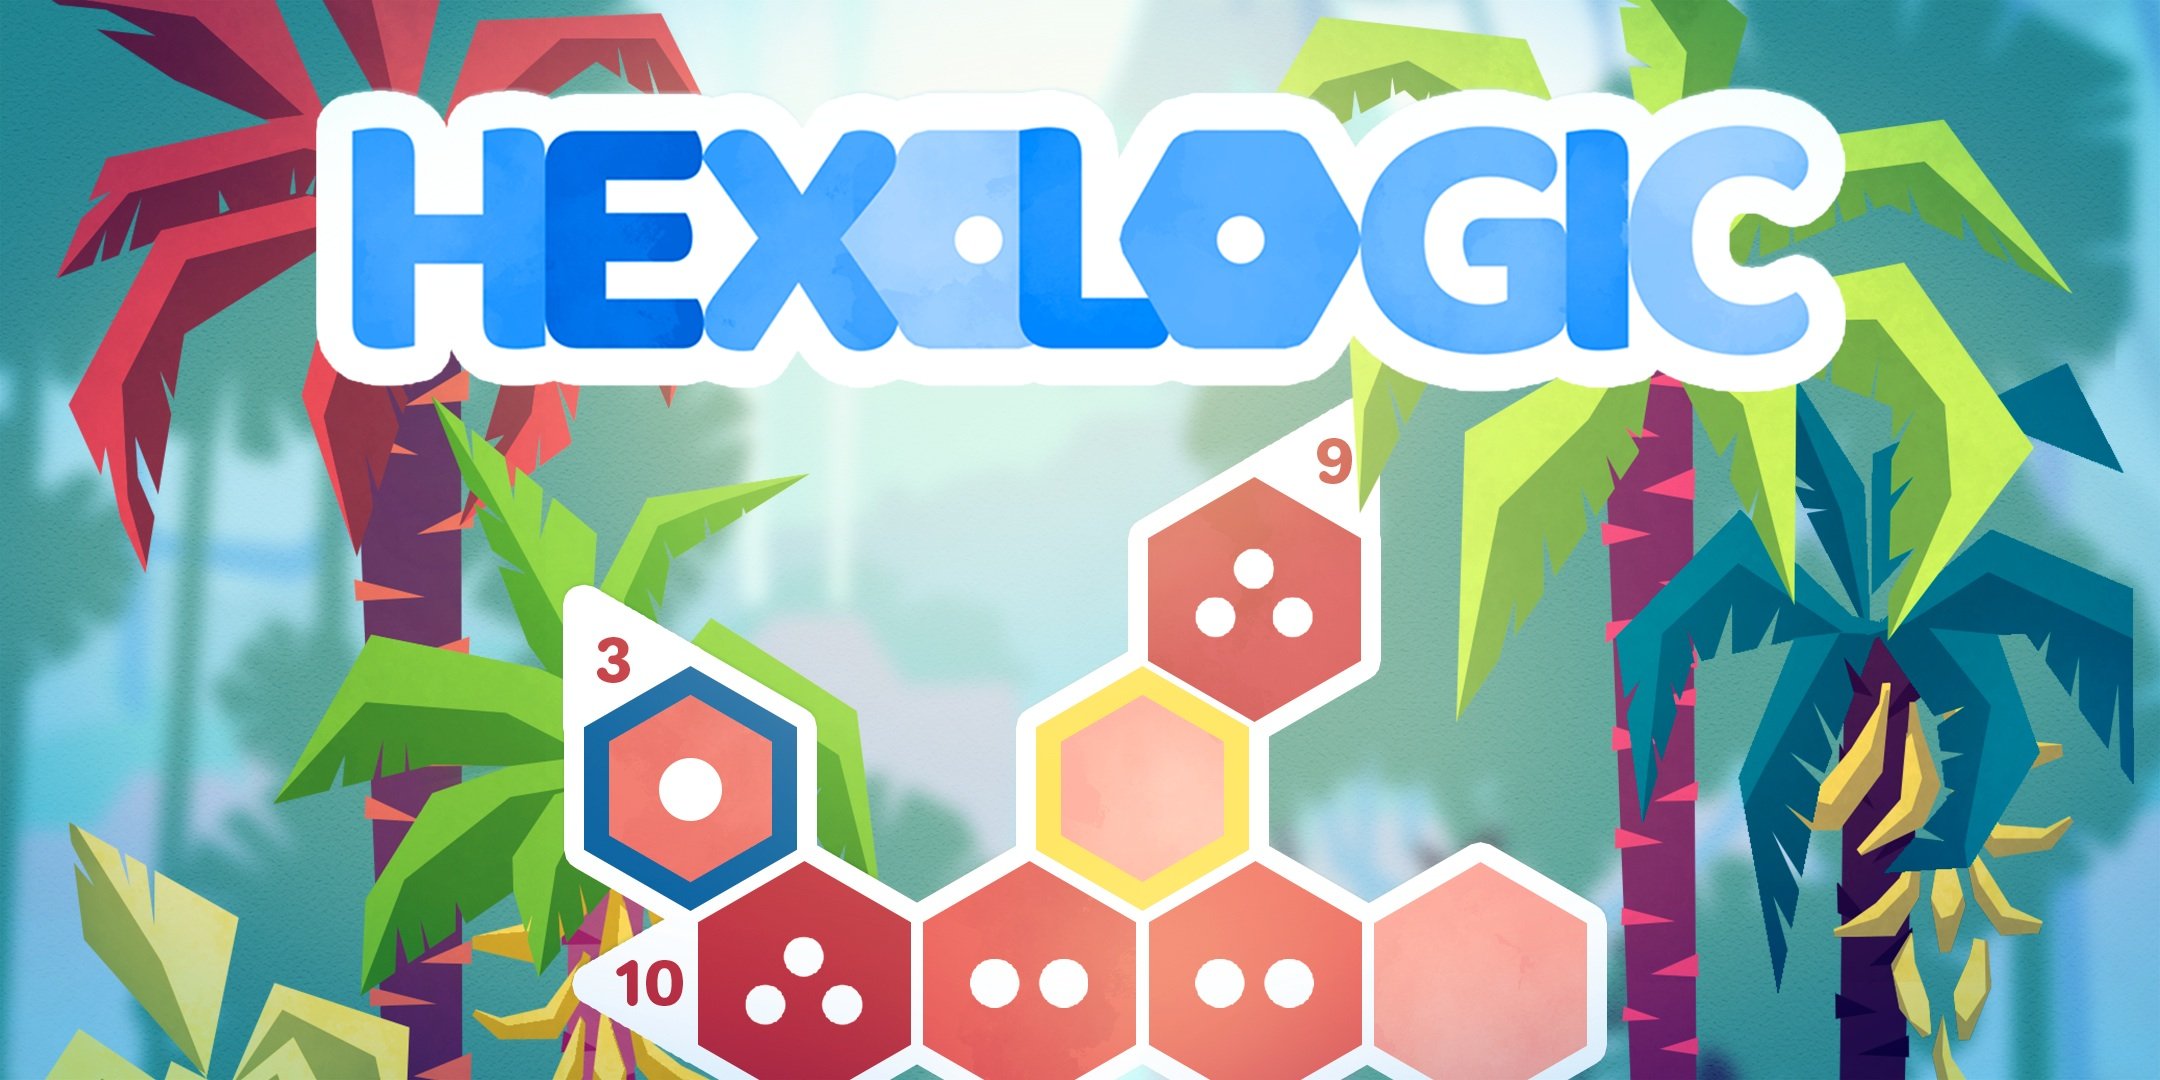 Hexologic is the stylish spiritual successor to sudoku on mobile